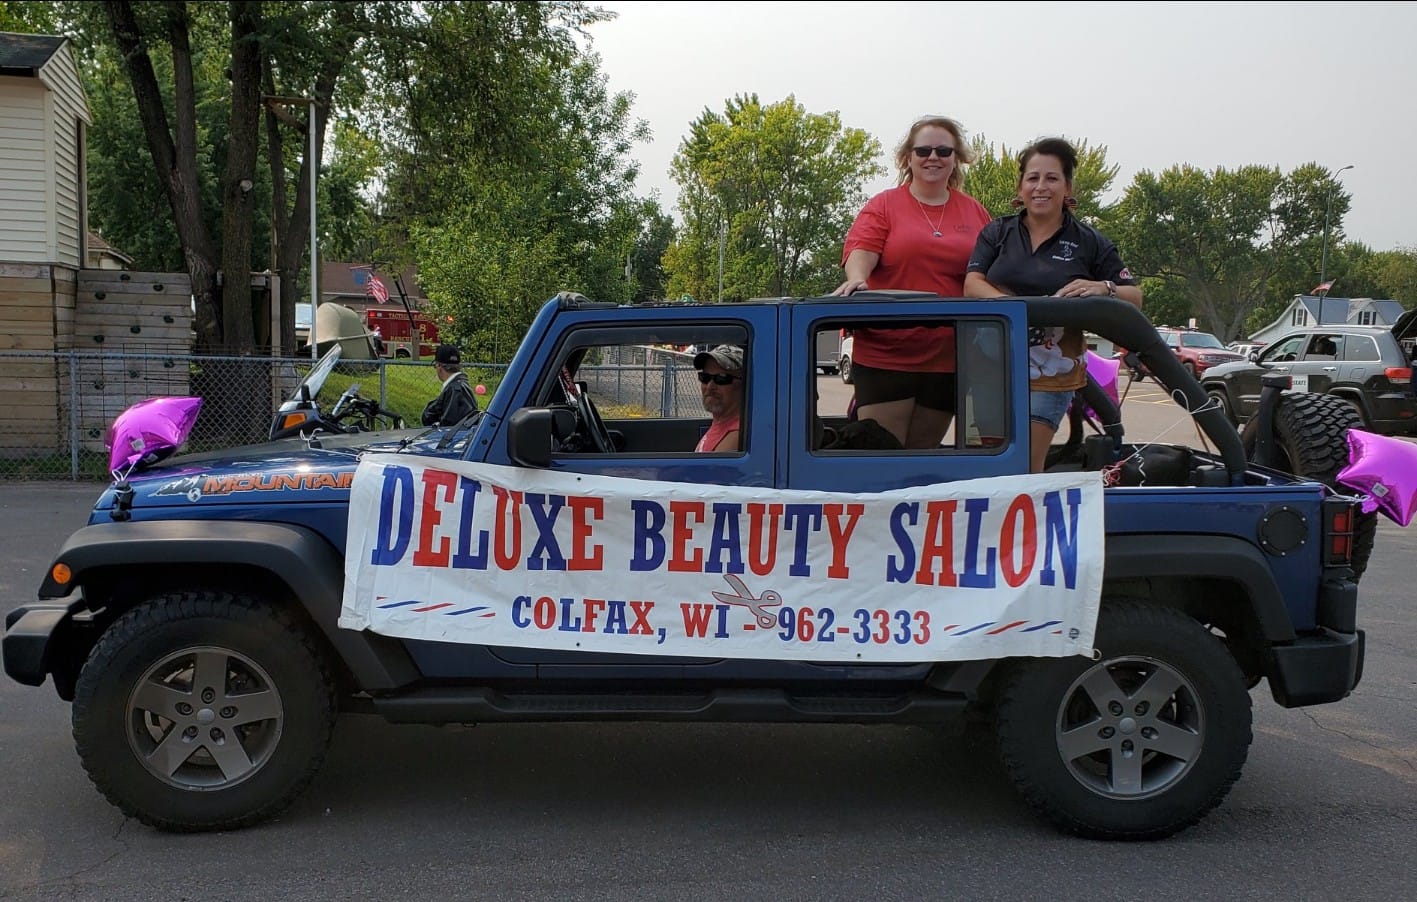 Deluxe Beauty Shop 610 Main St, Colfax Wisconsin 54730